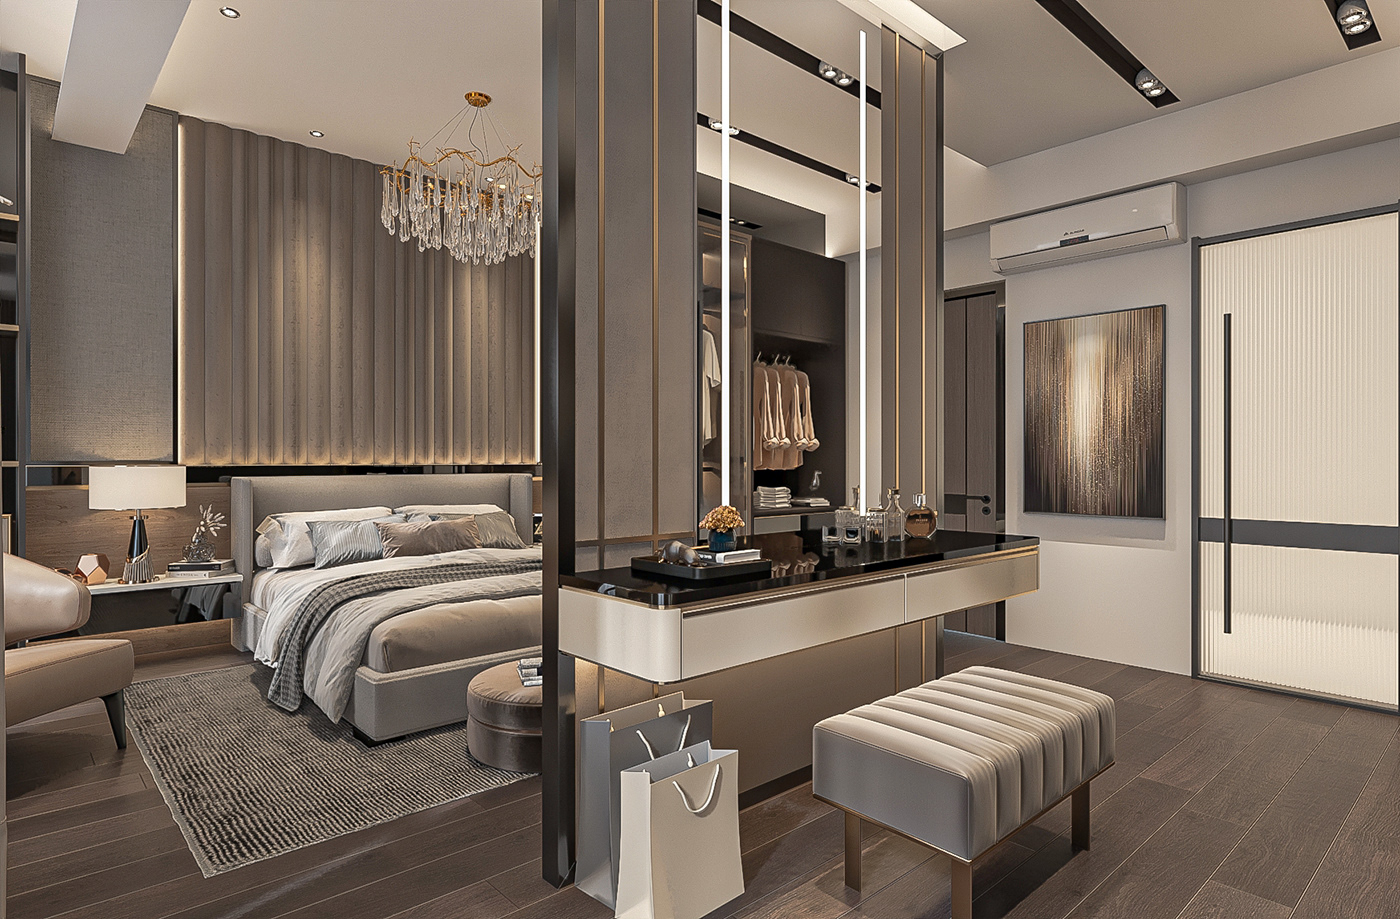 dkonzeptes dry kitchen home interiordesign living area luxe design Luxury Design malaysia interior